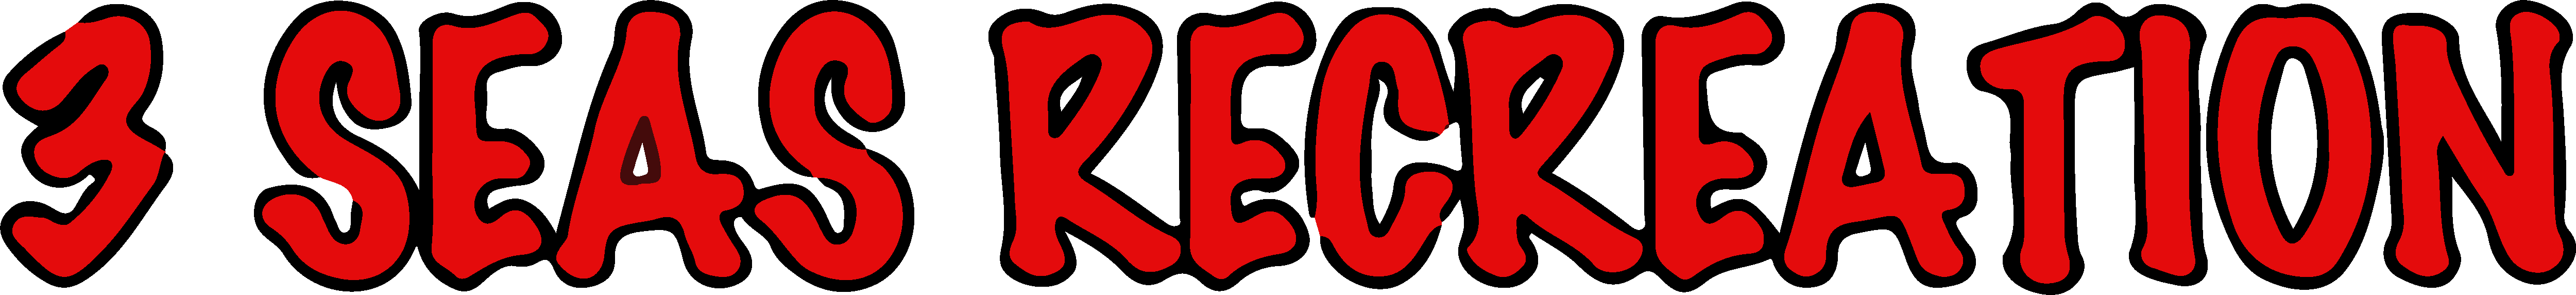 3_SEAS_RECREATION_Logo